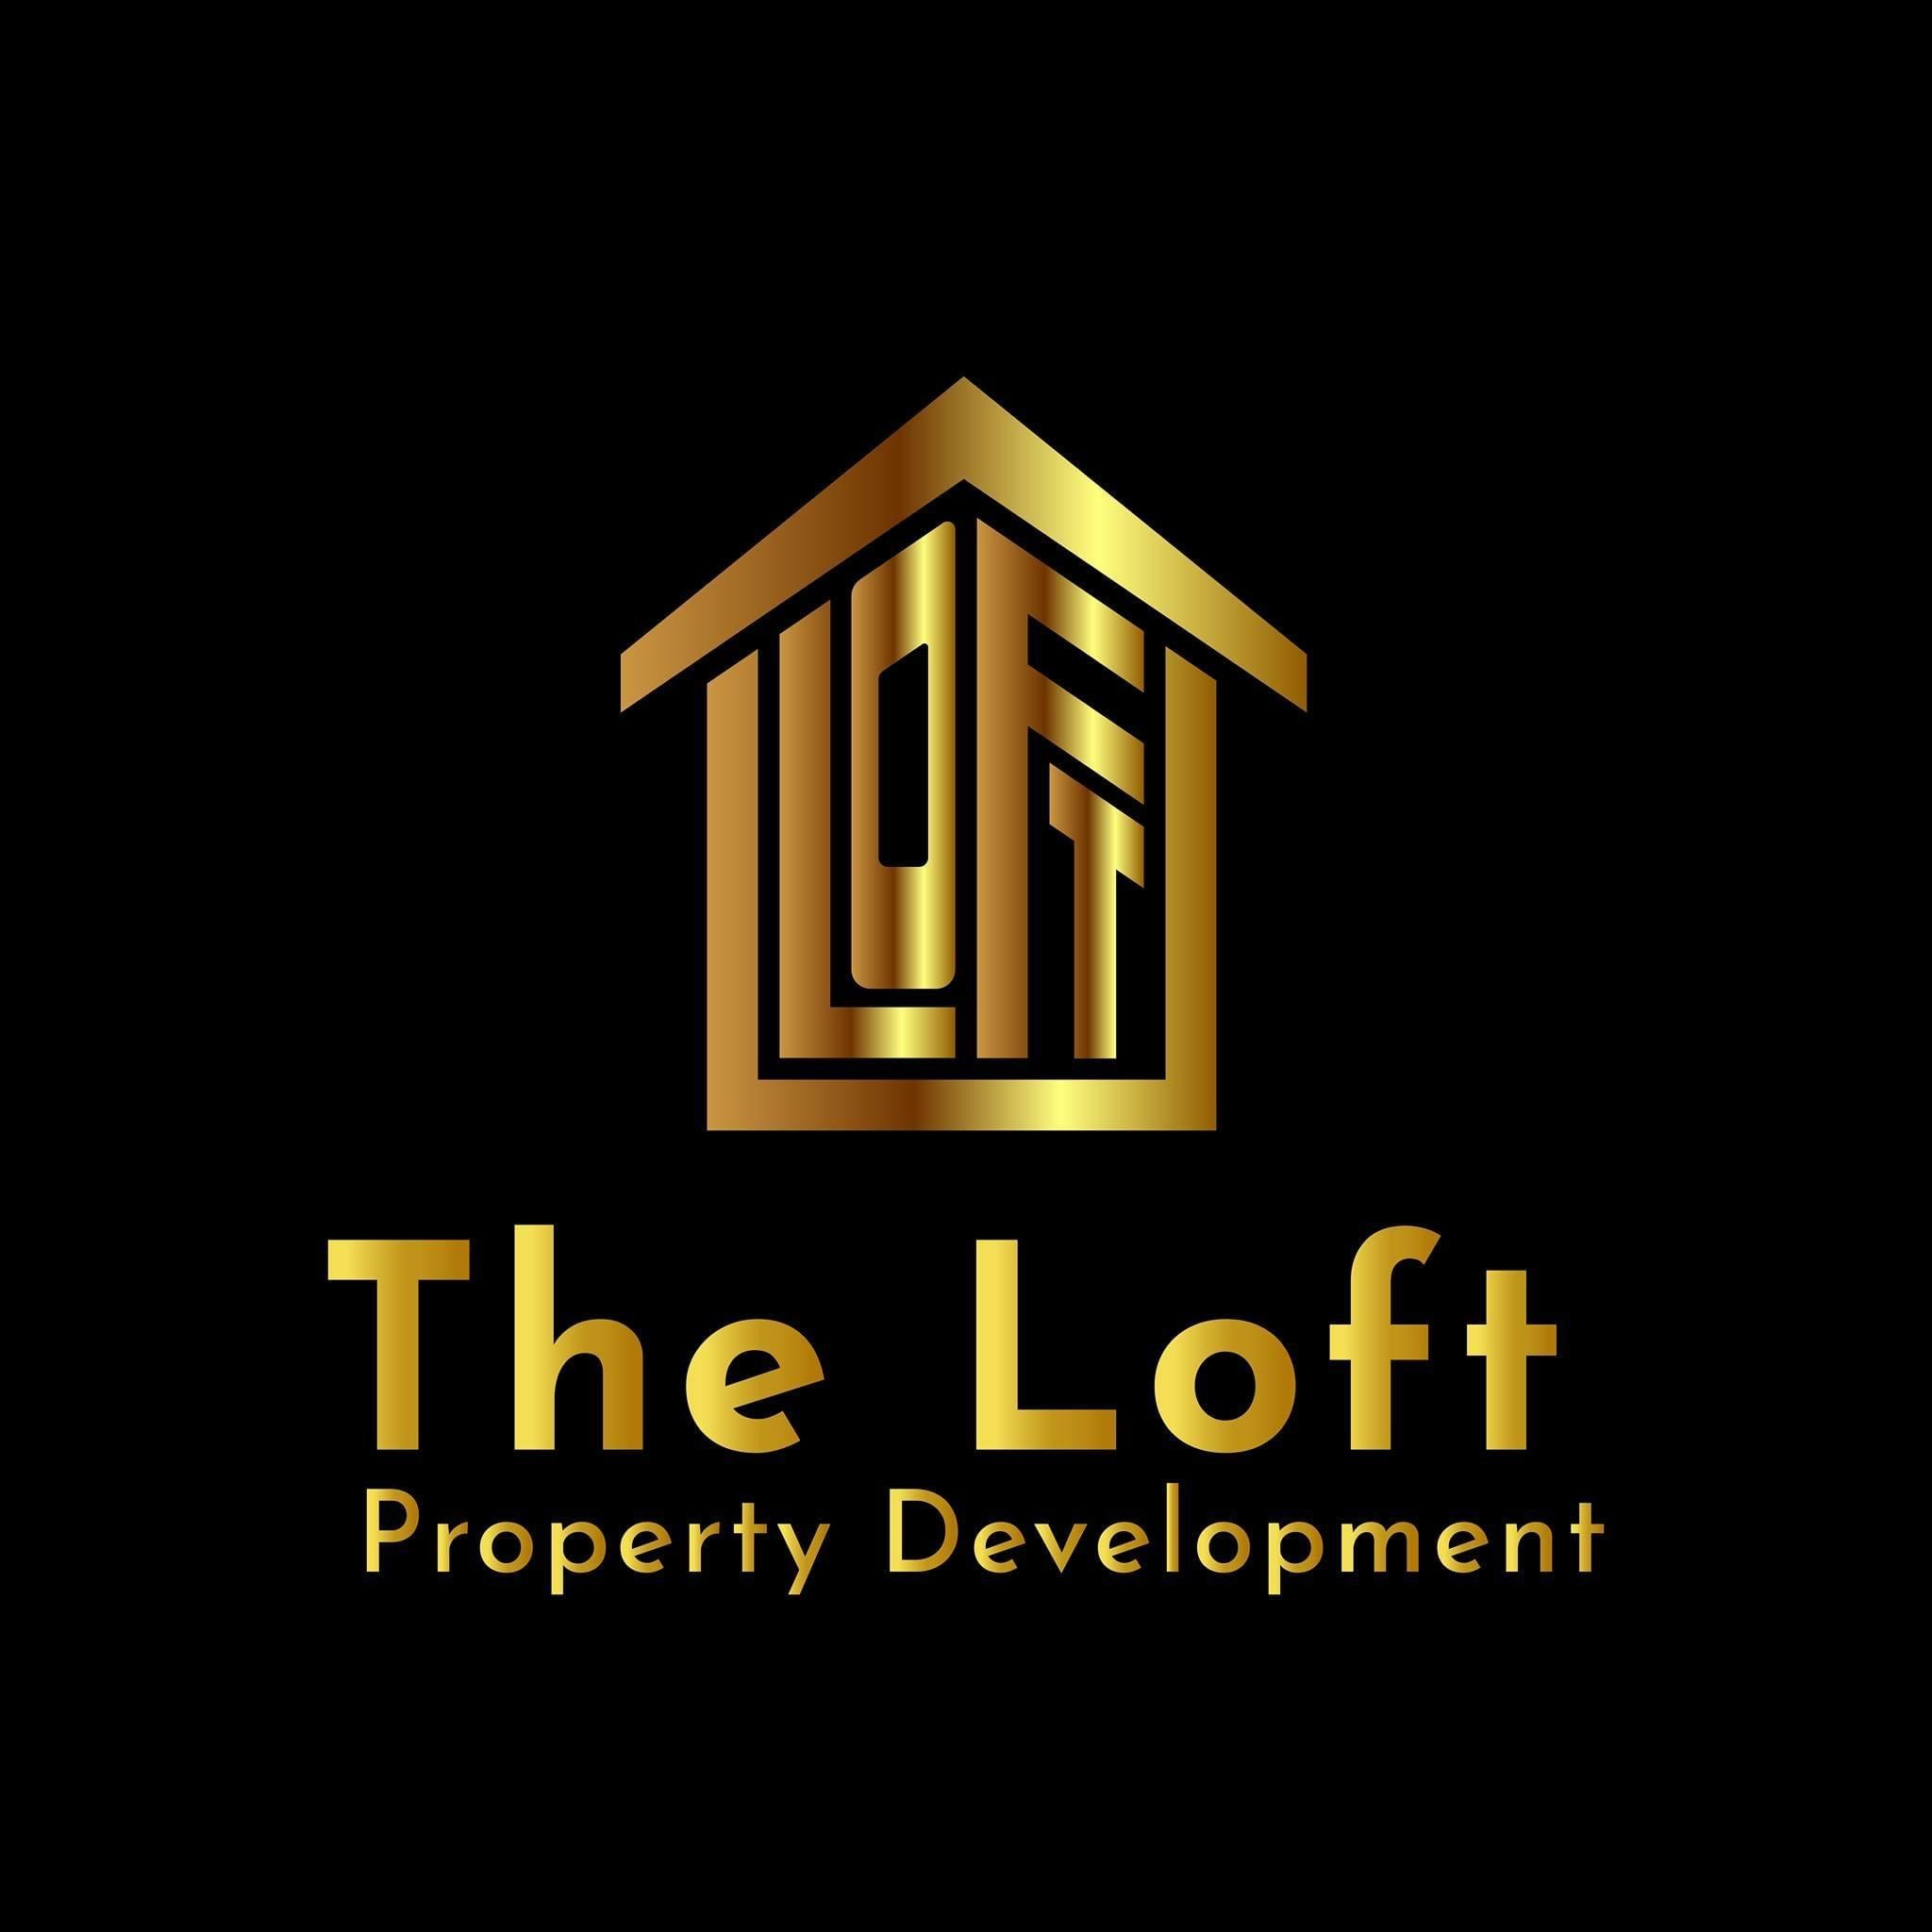 The Loft Property Development